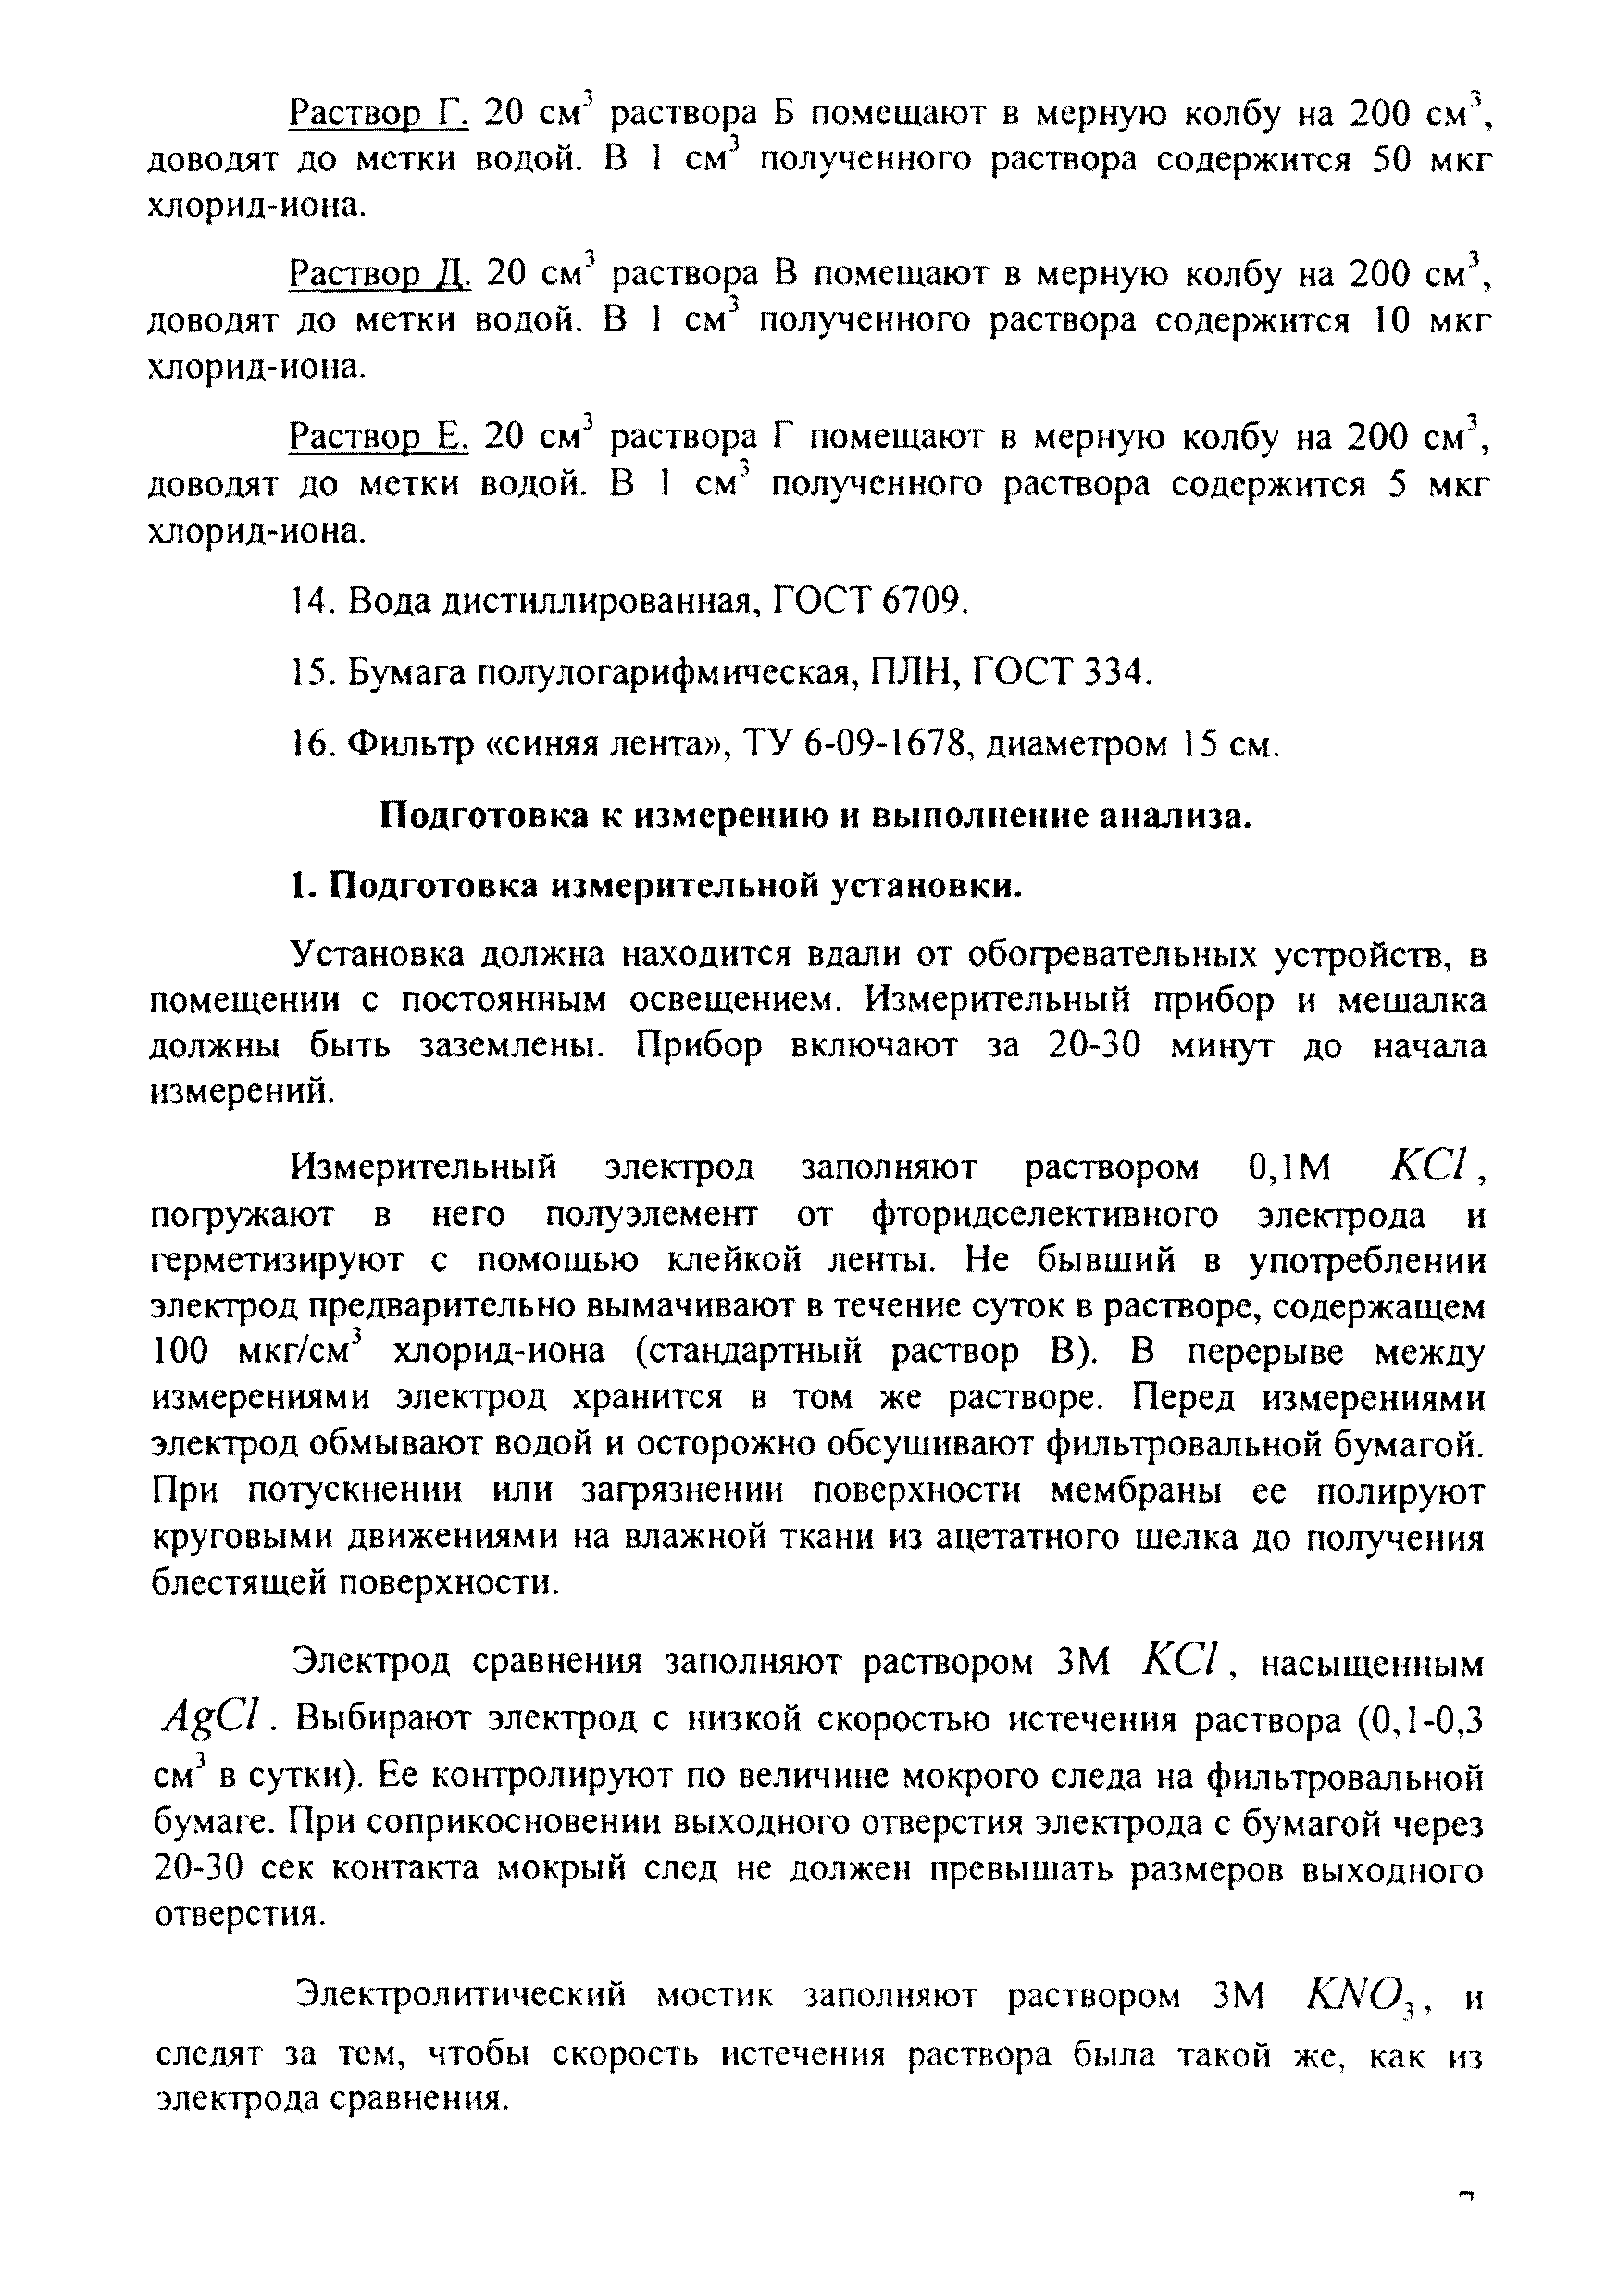 Инструкция НСАМ 358-Х